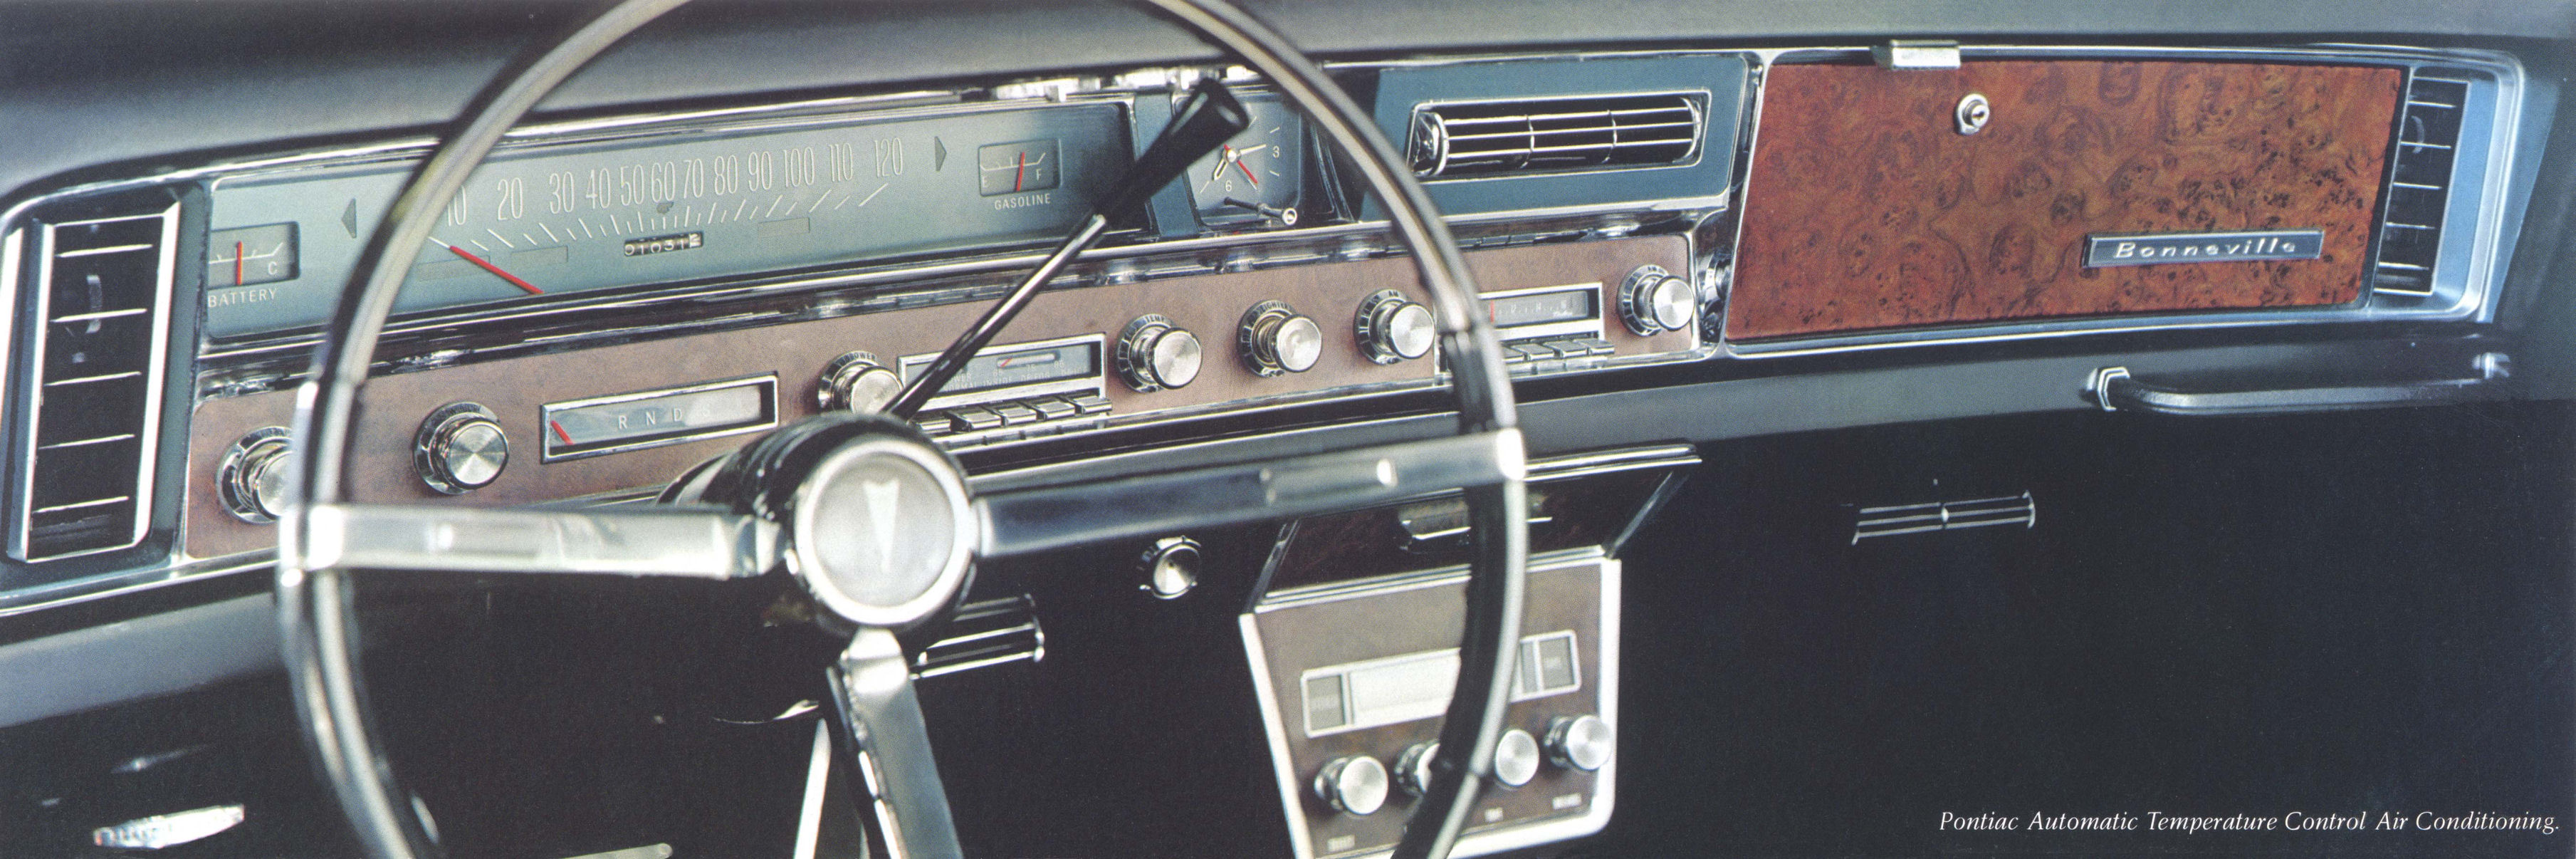 1967_Pontiac_Air_Conditioning-04-05